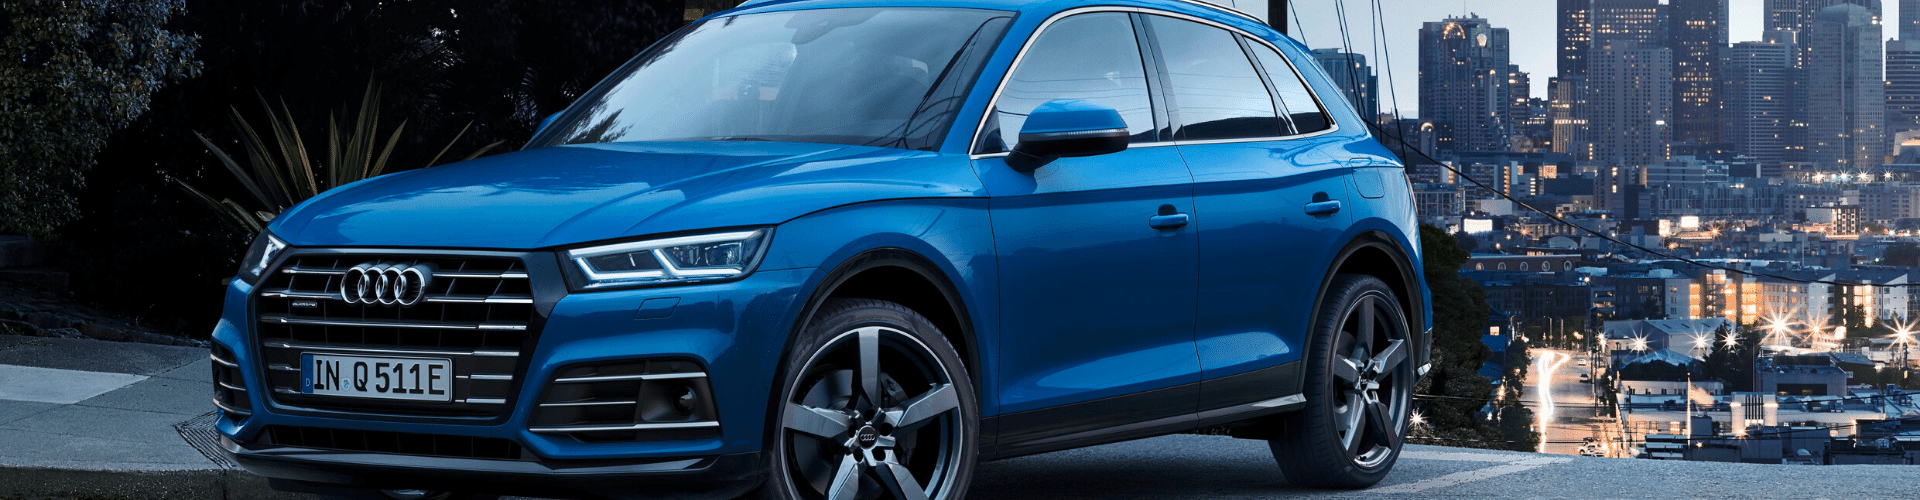 Audi autoverzekering